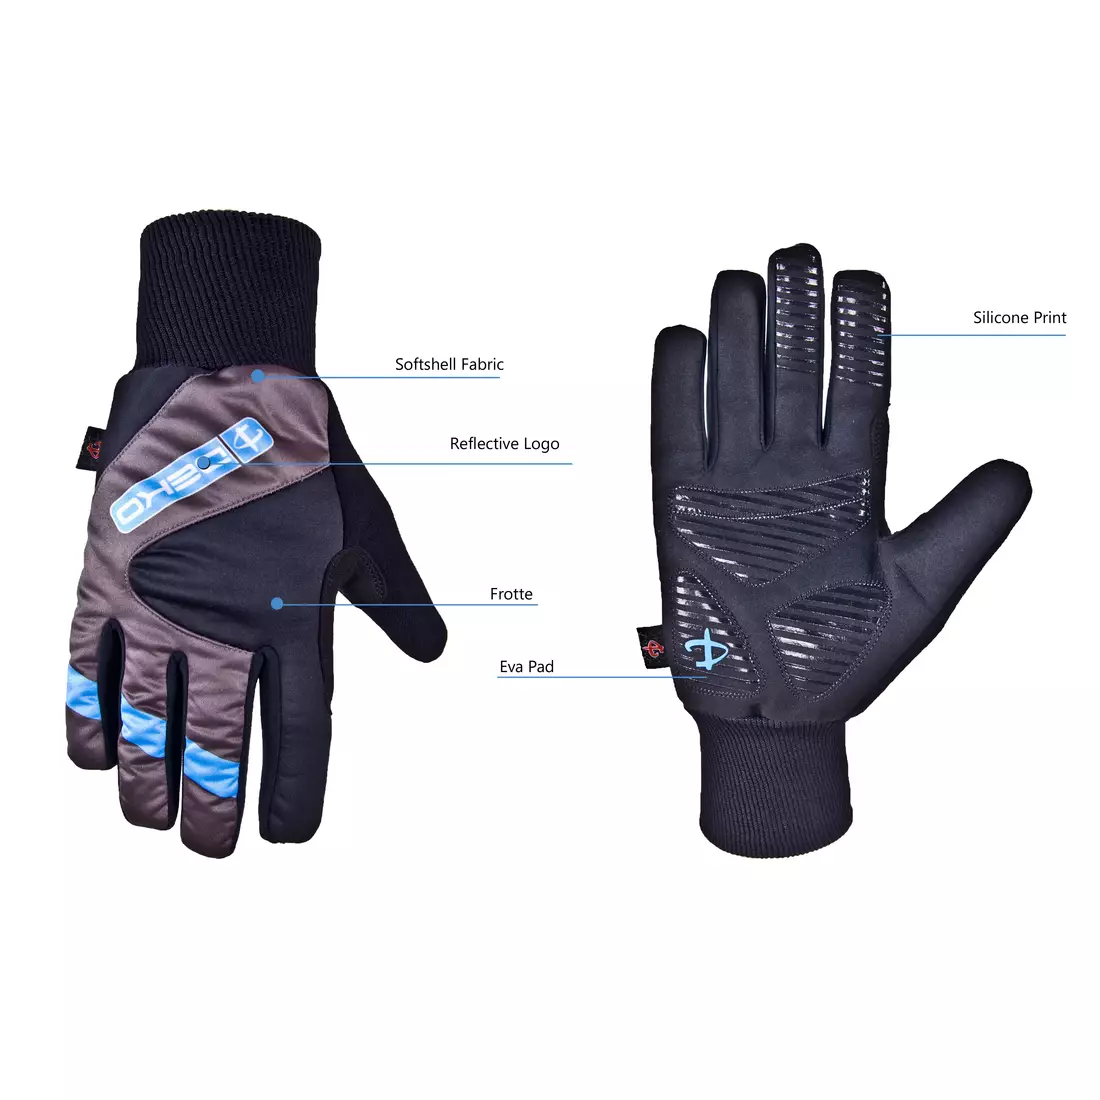 DEKO RAST winter cycling gloves black and blue DKW-910